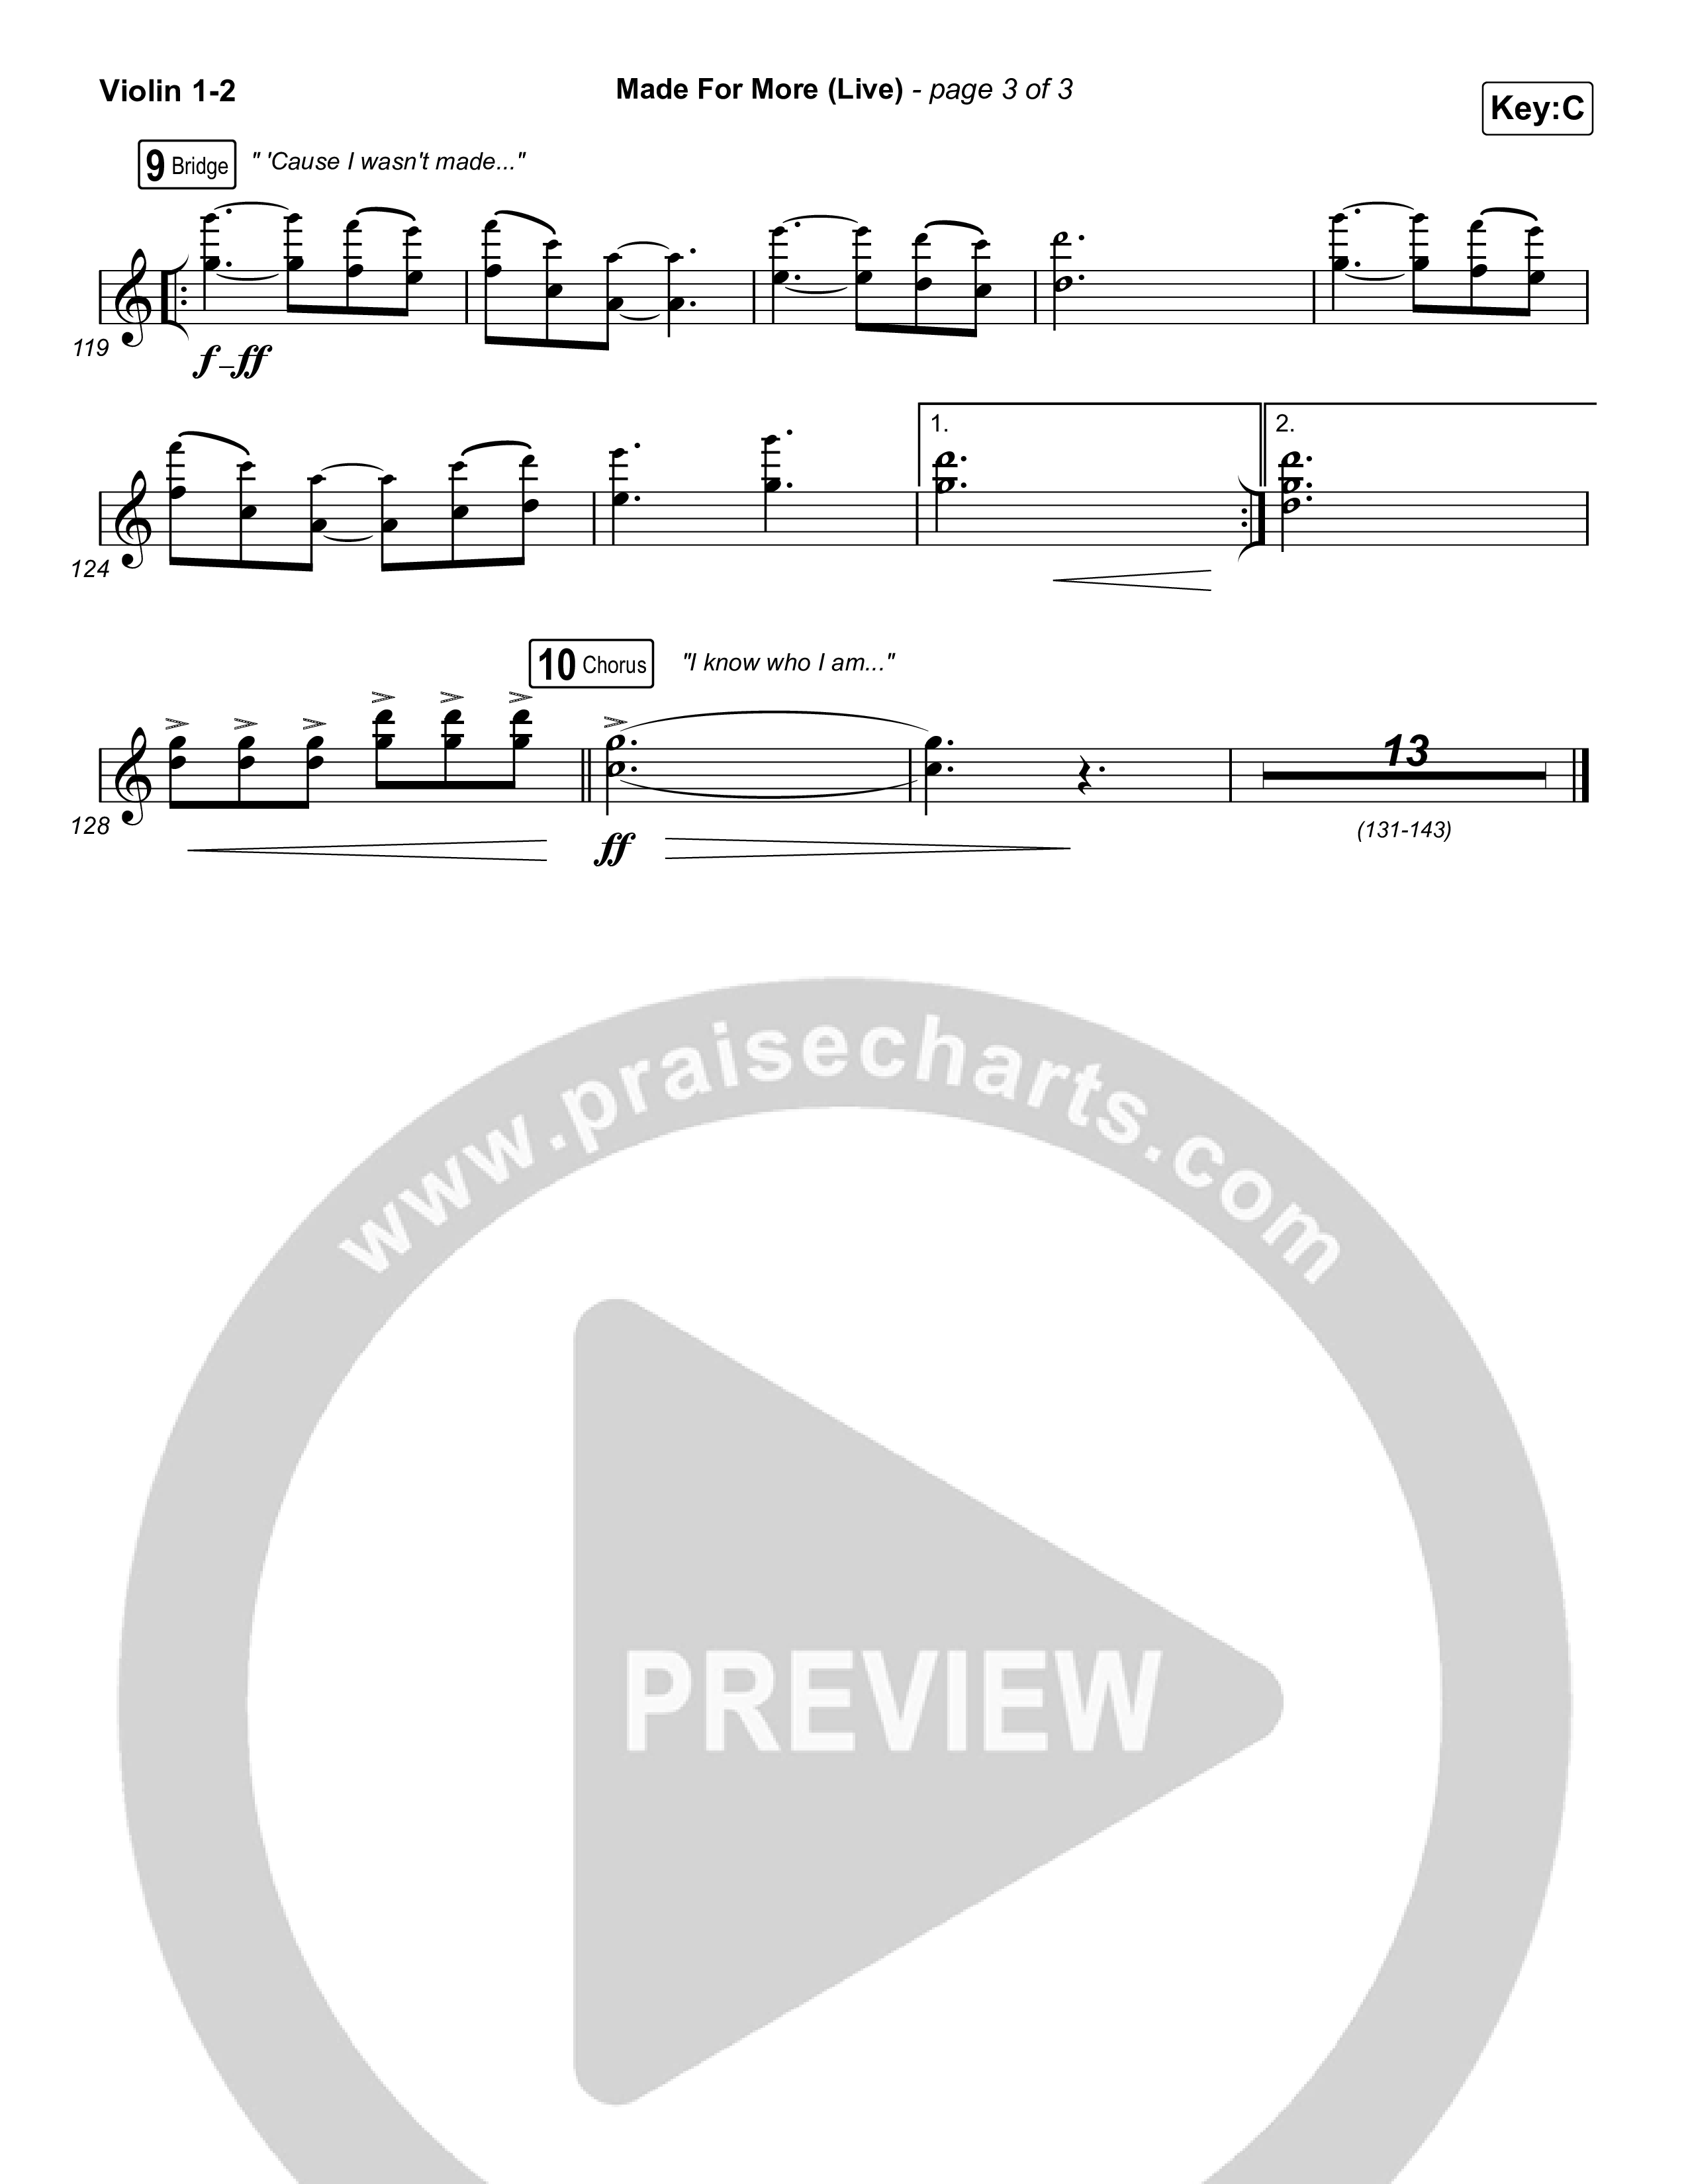 Made For More (Choral Anthem SATB) Violin 1,2 (Josh Baldwin / Jenn Johnson / Arr. Luke Gambill)